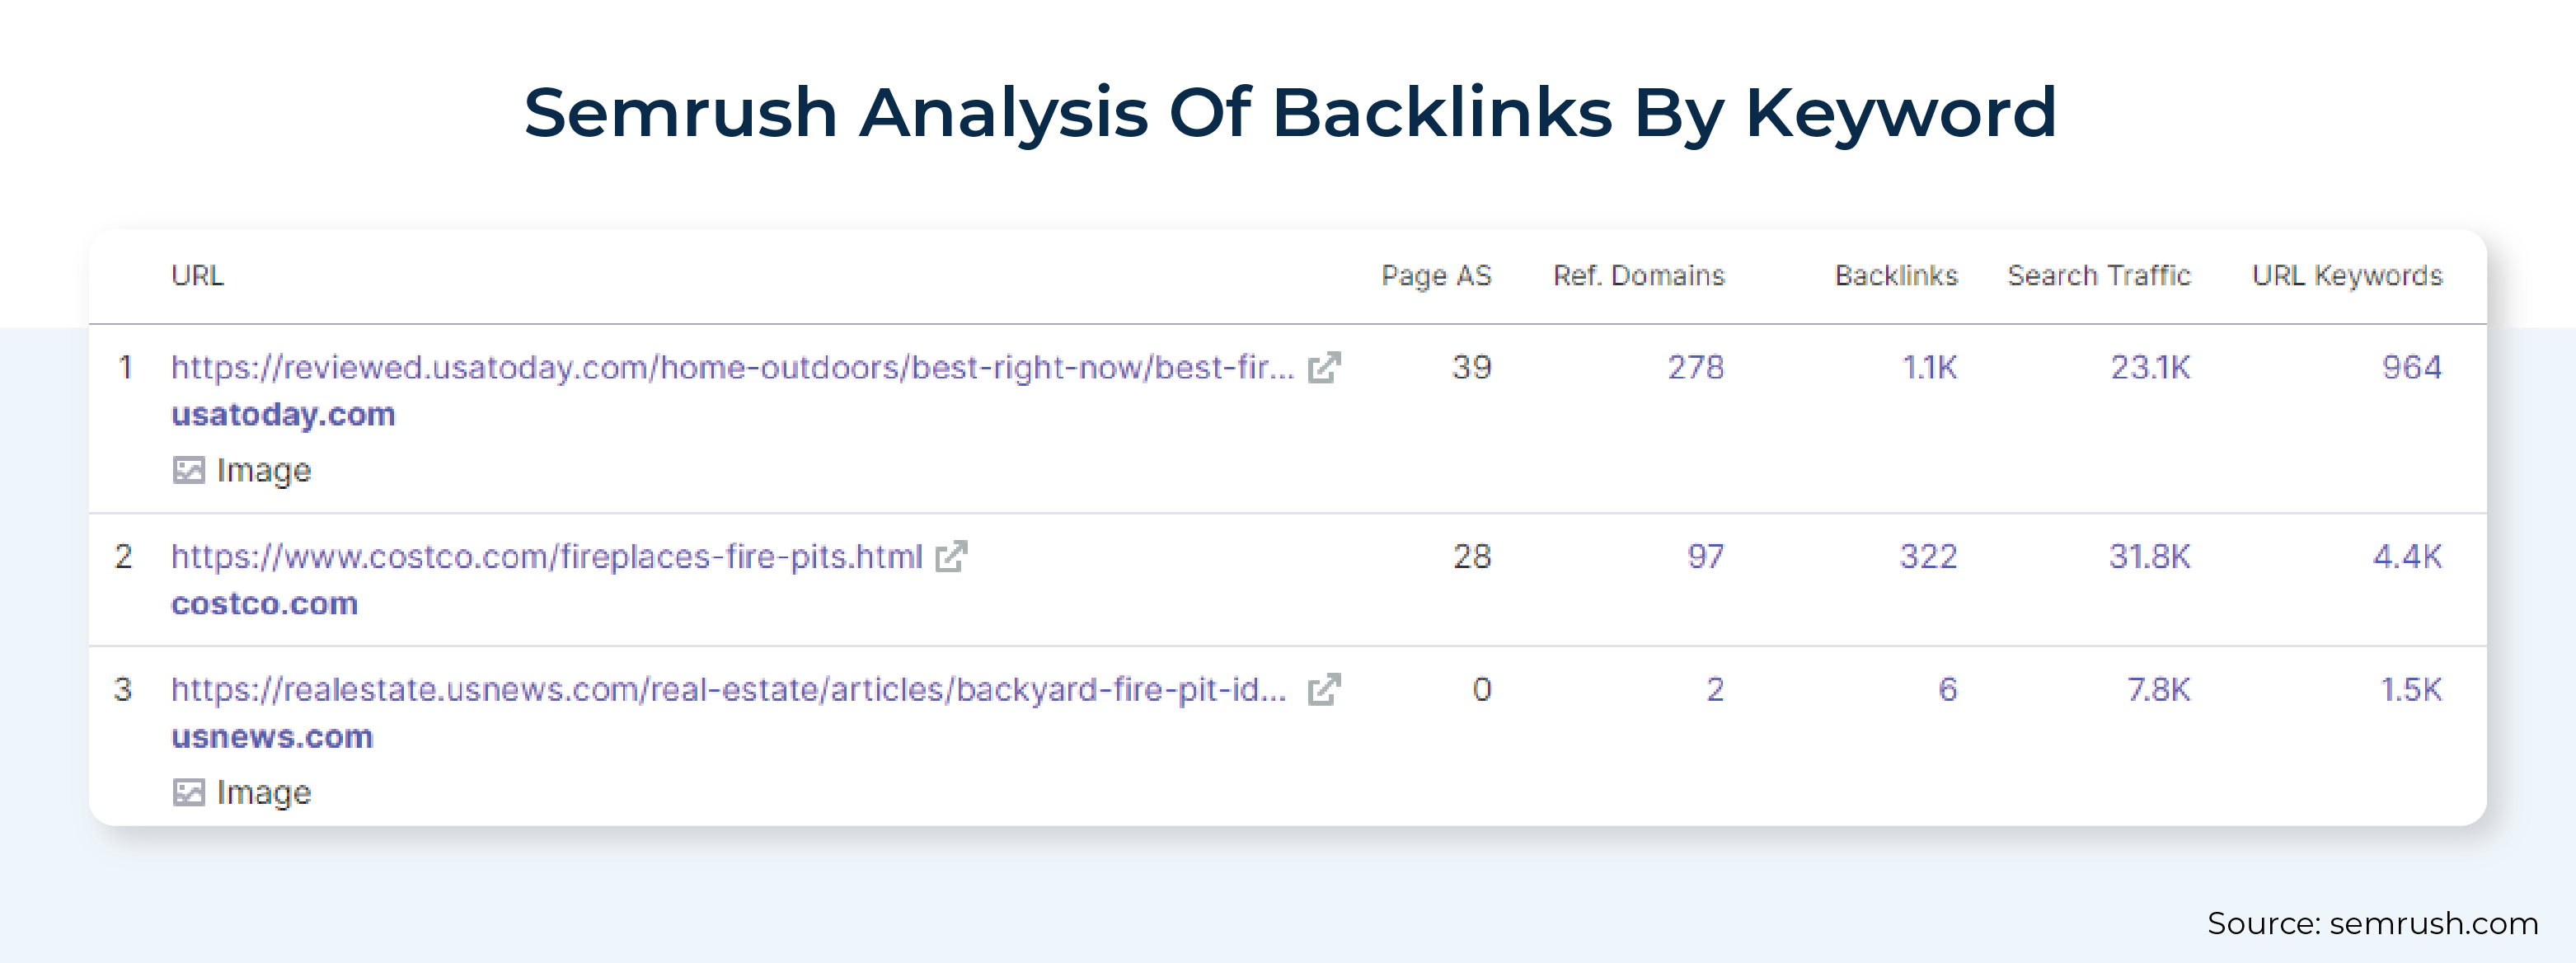 Semrush Analysis Of Backlinks By Keyword